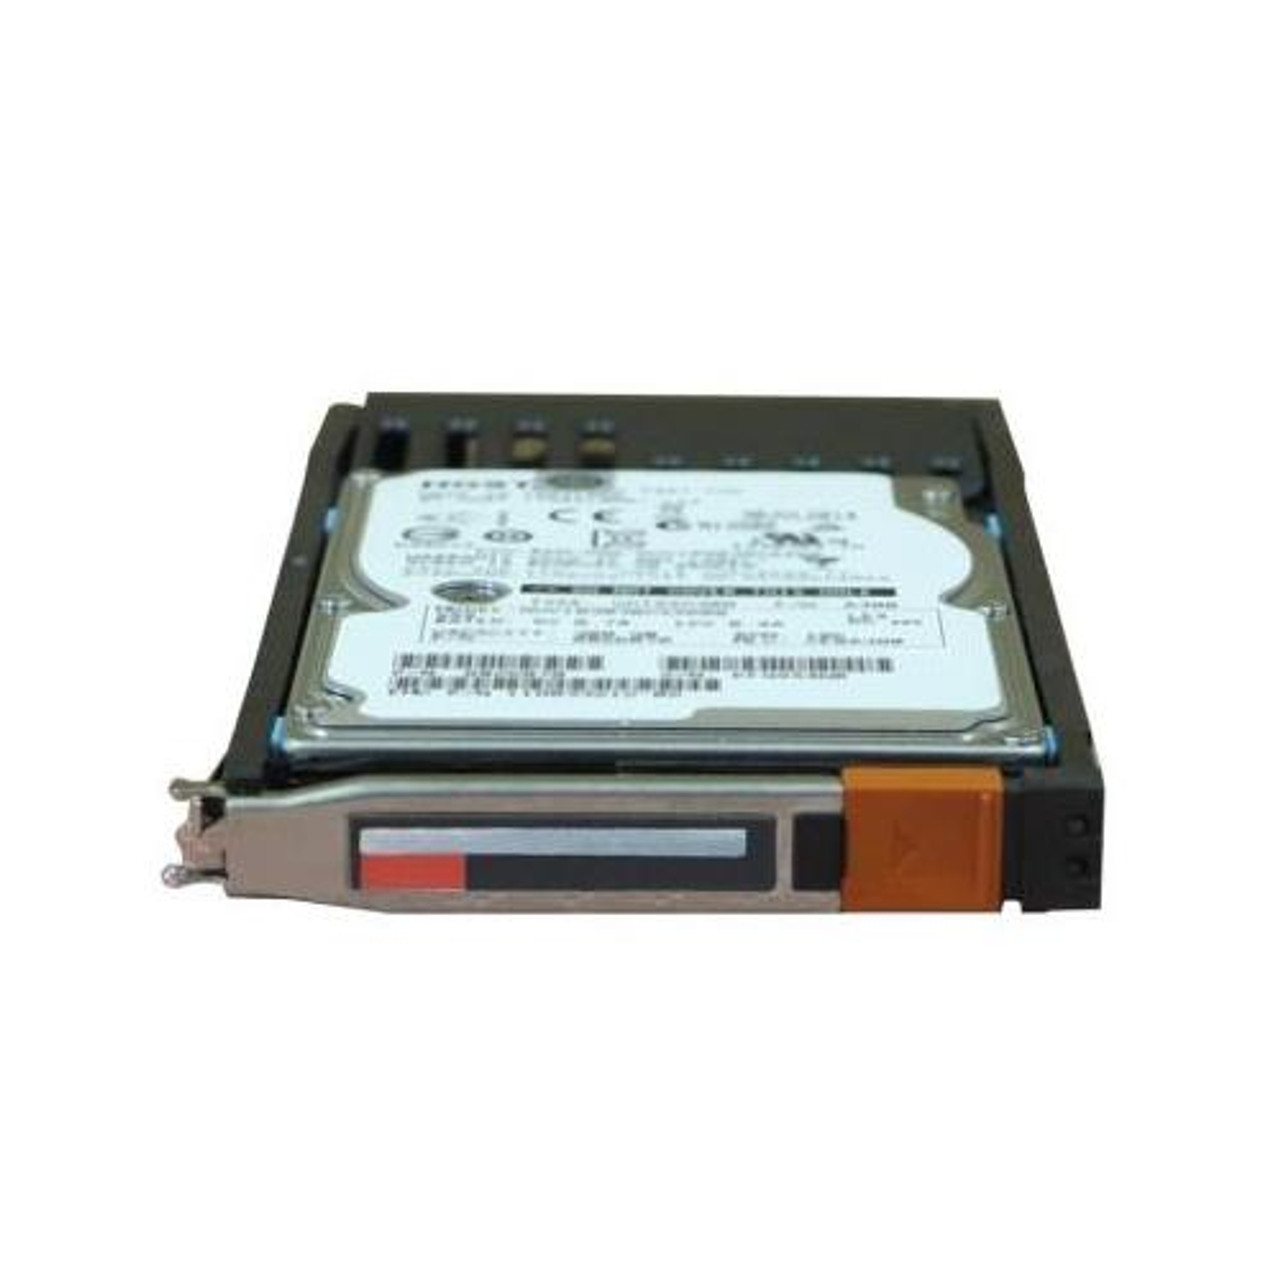 005049197 EMC 300GB 10000RPM SAS 6Gbps 2.5-inch Internal Hard